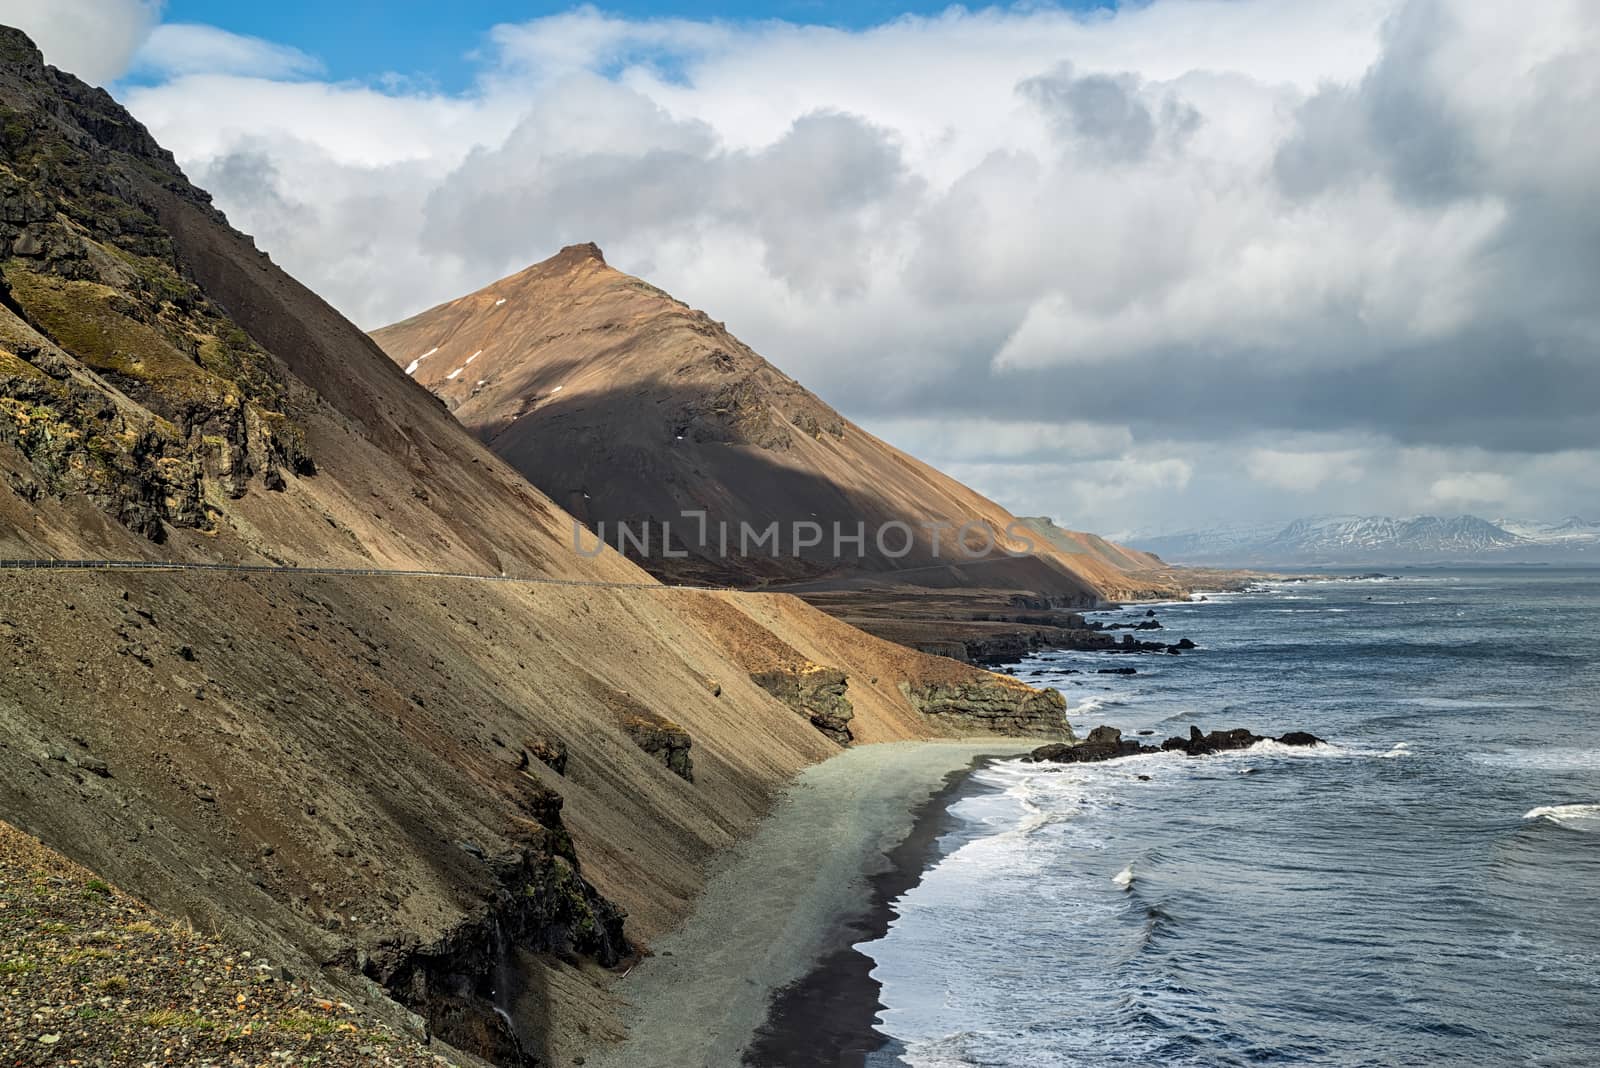 Krossnesfjall mountain on the eastside of Iceland by LuigiMorbidelli